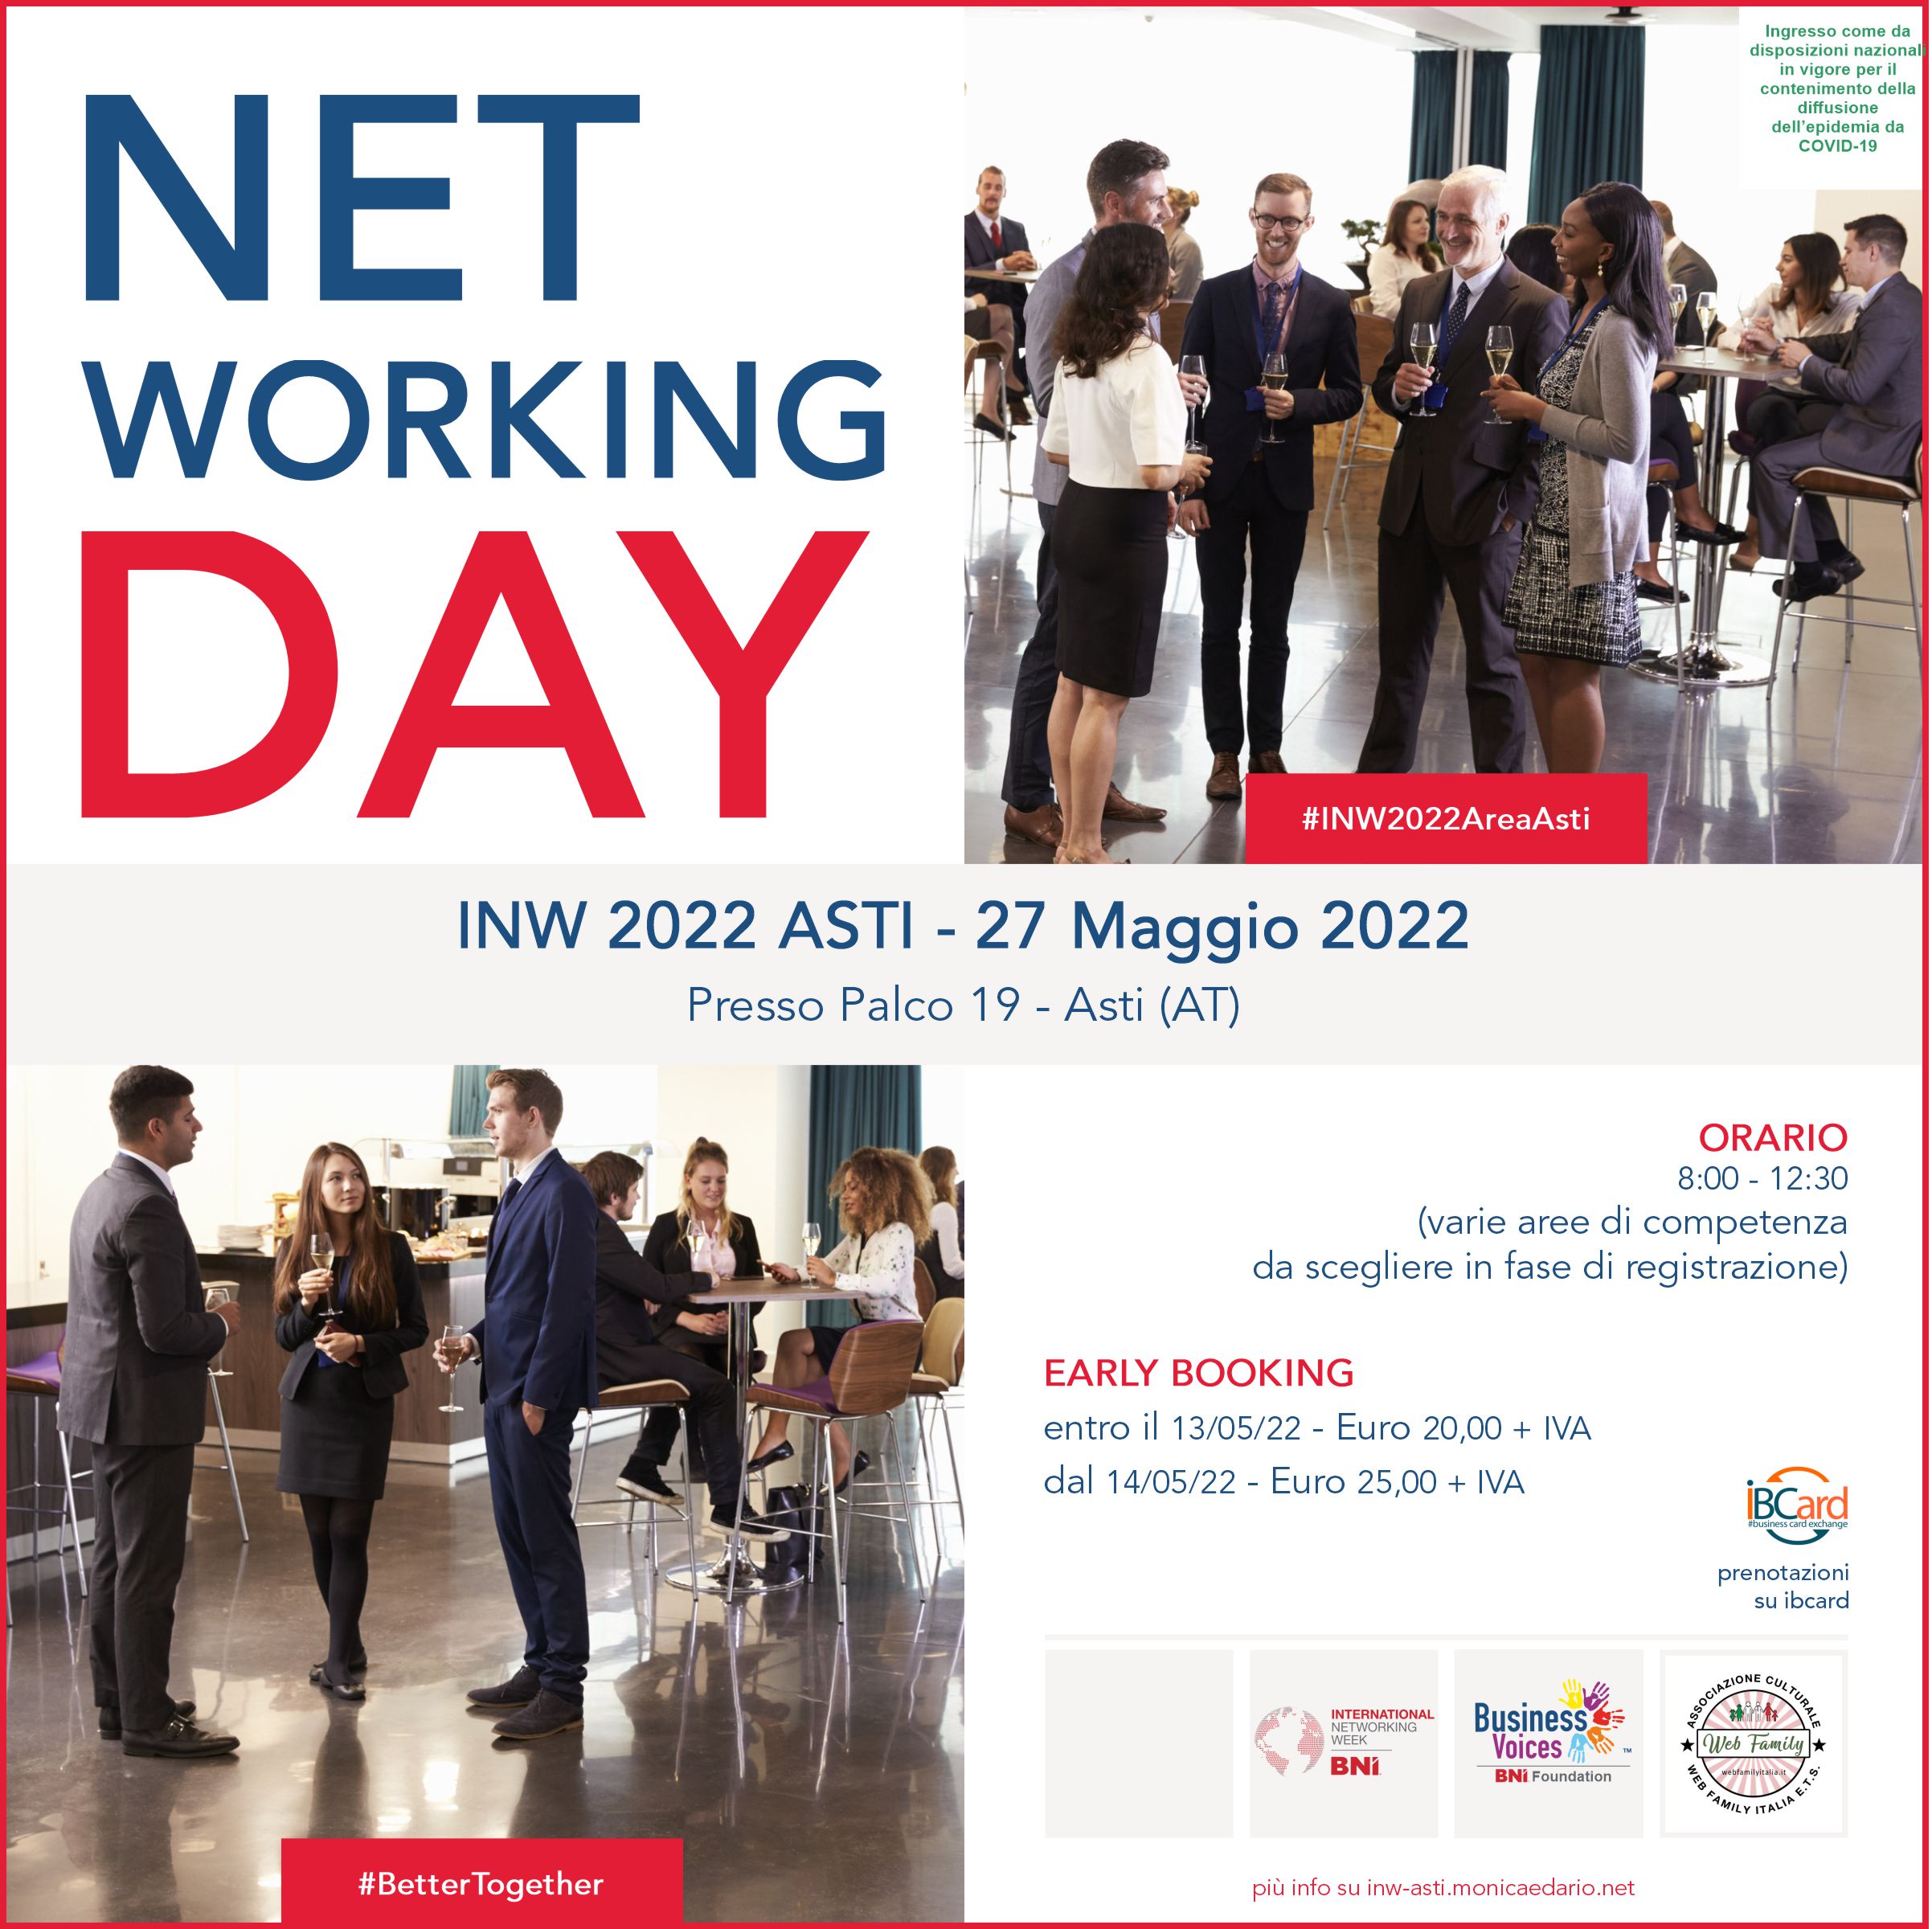 Networking Day - INW2022 Asti